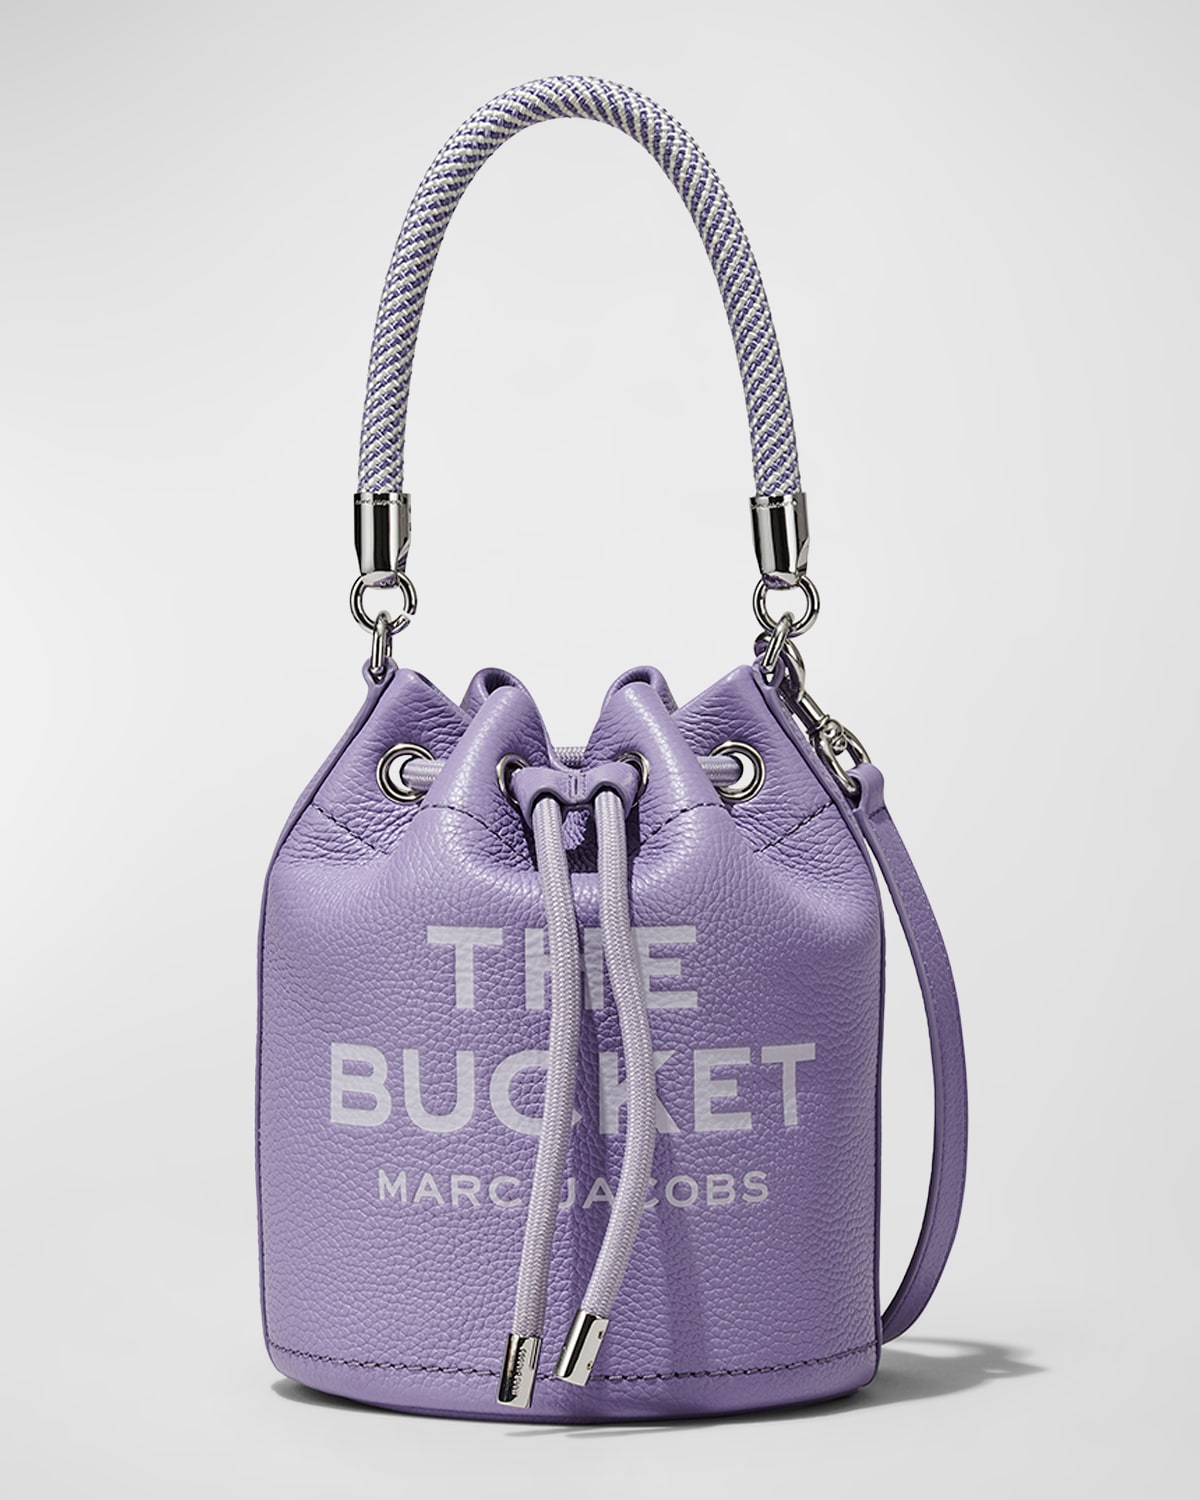 Marc Jacobs Logo Leather Bucket Bag